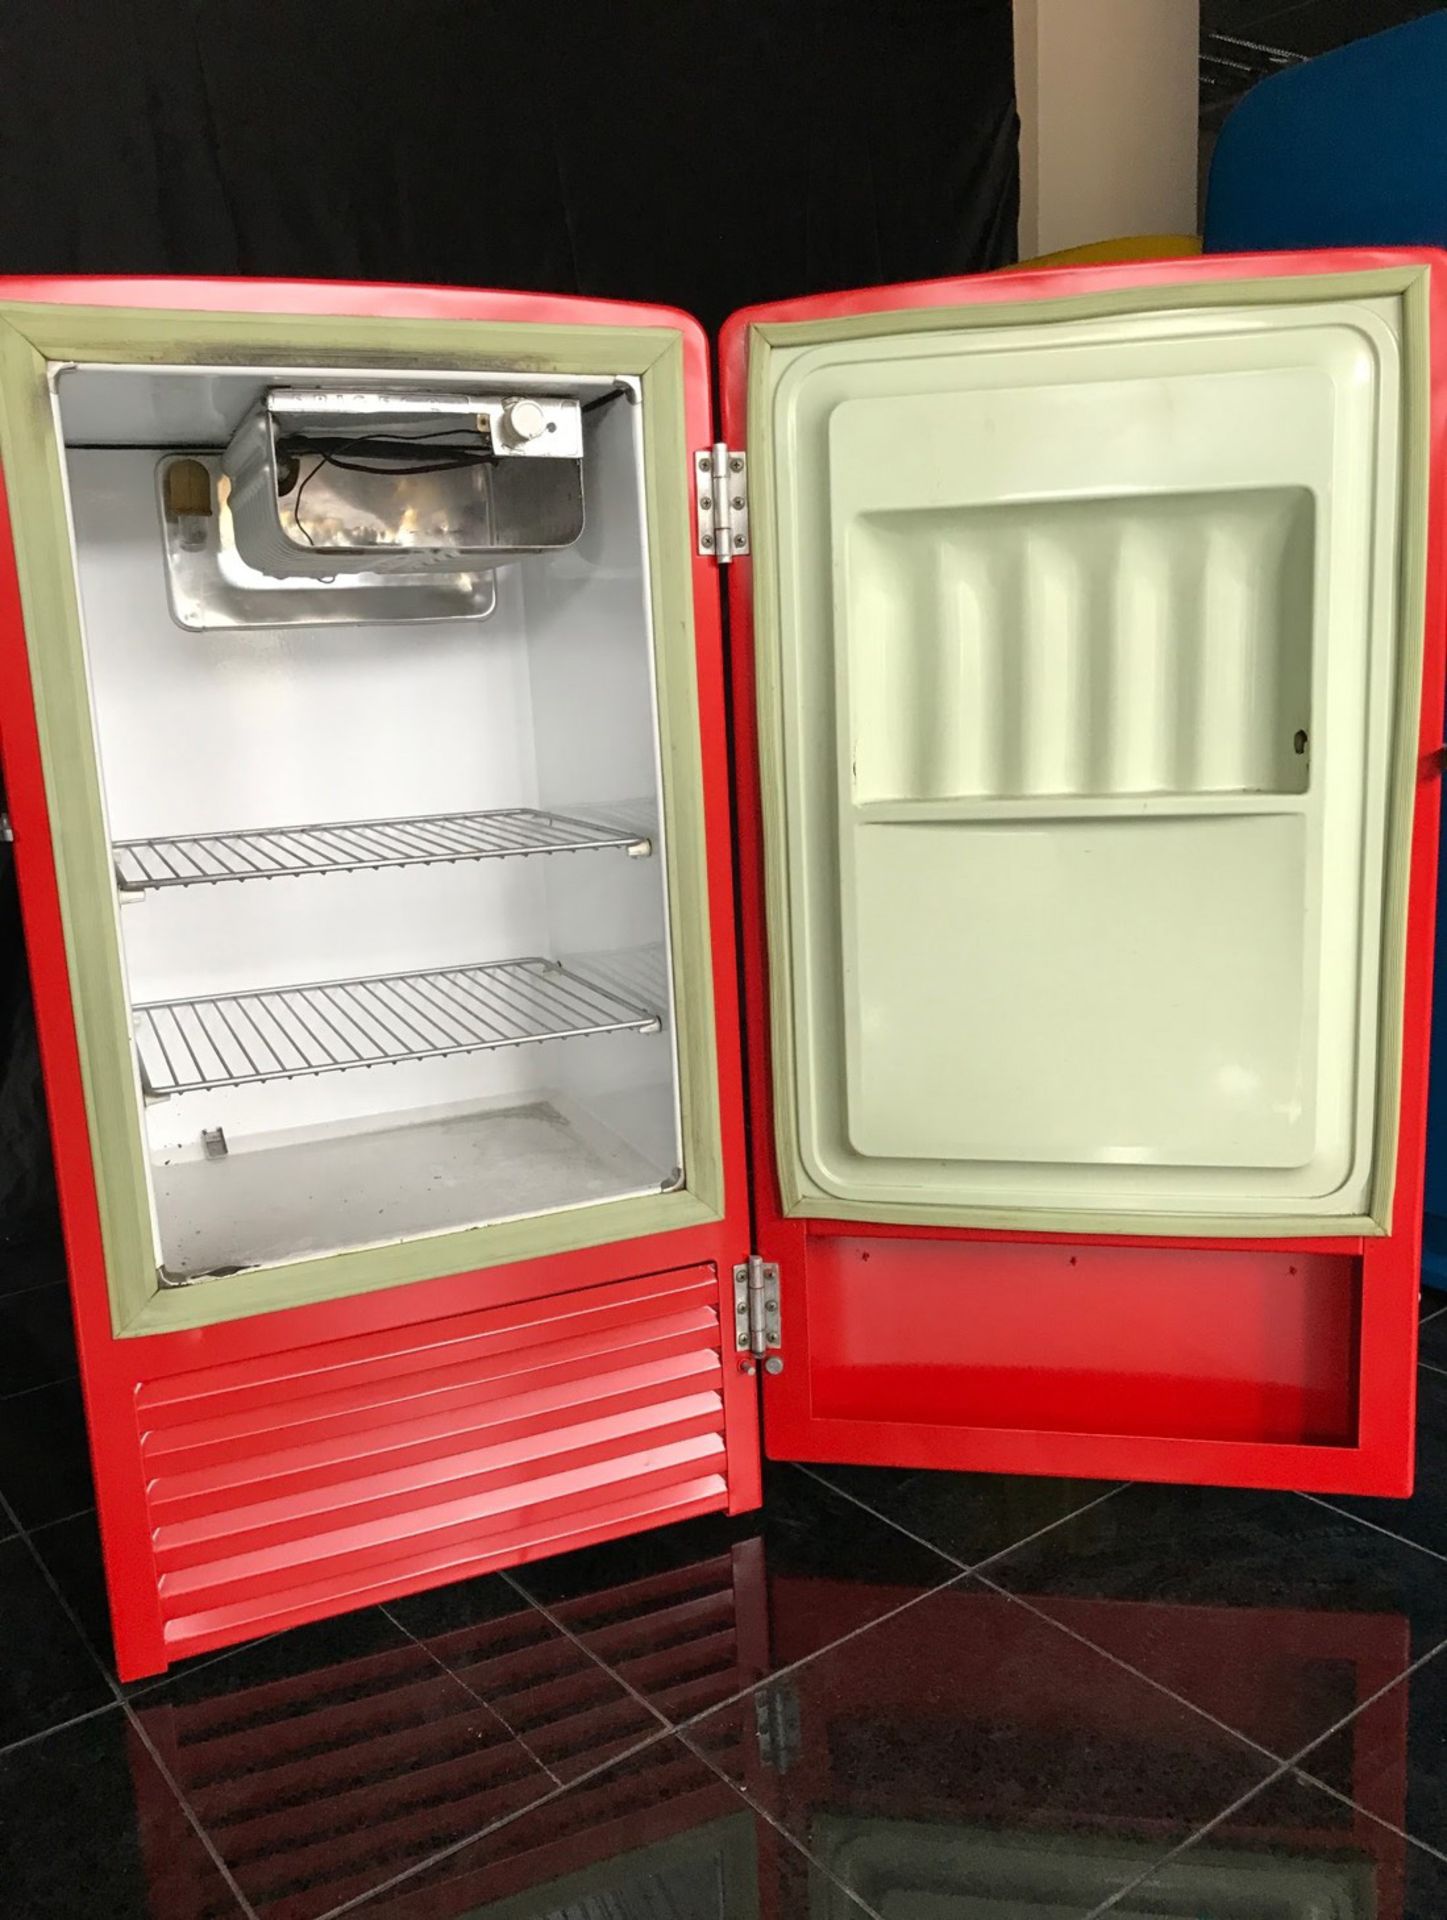 1957 Frigeco Refrigerator in Matt Red Color - Image 2 of 2